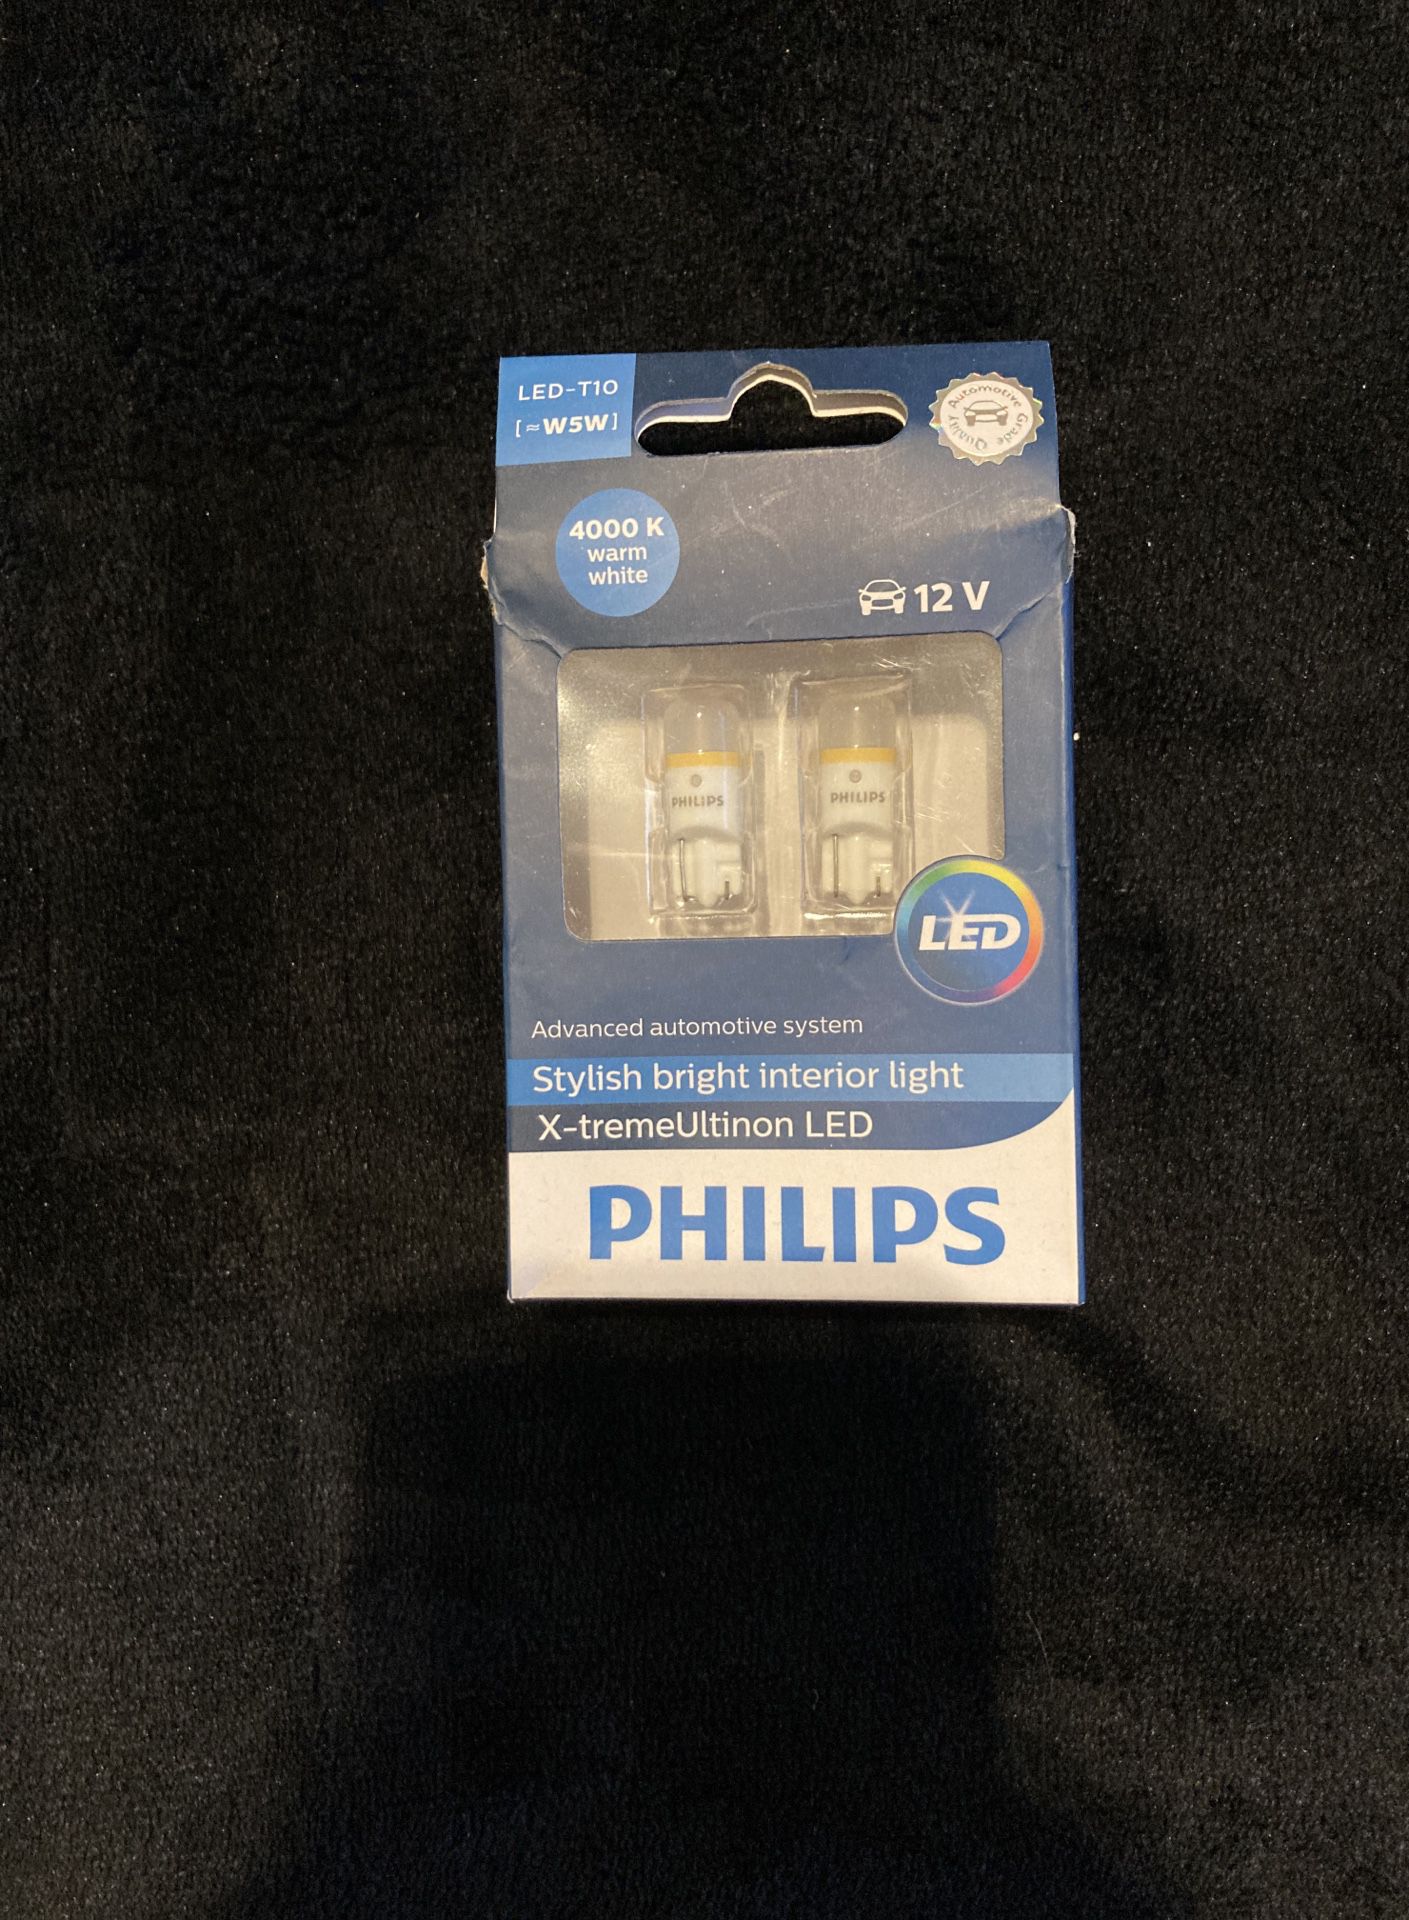 Philips LED T10 Bulb (W5W) 4000k Warm White, Pack Of 2